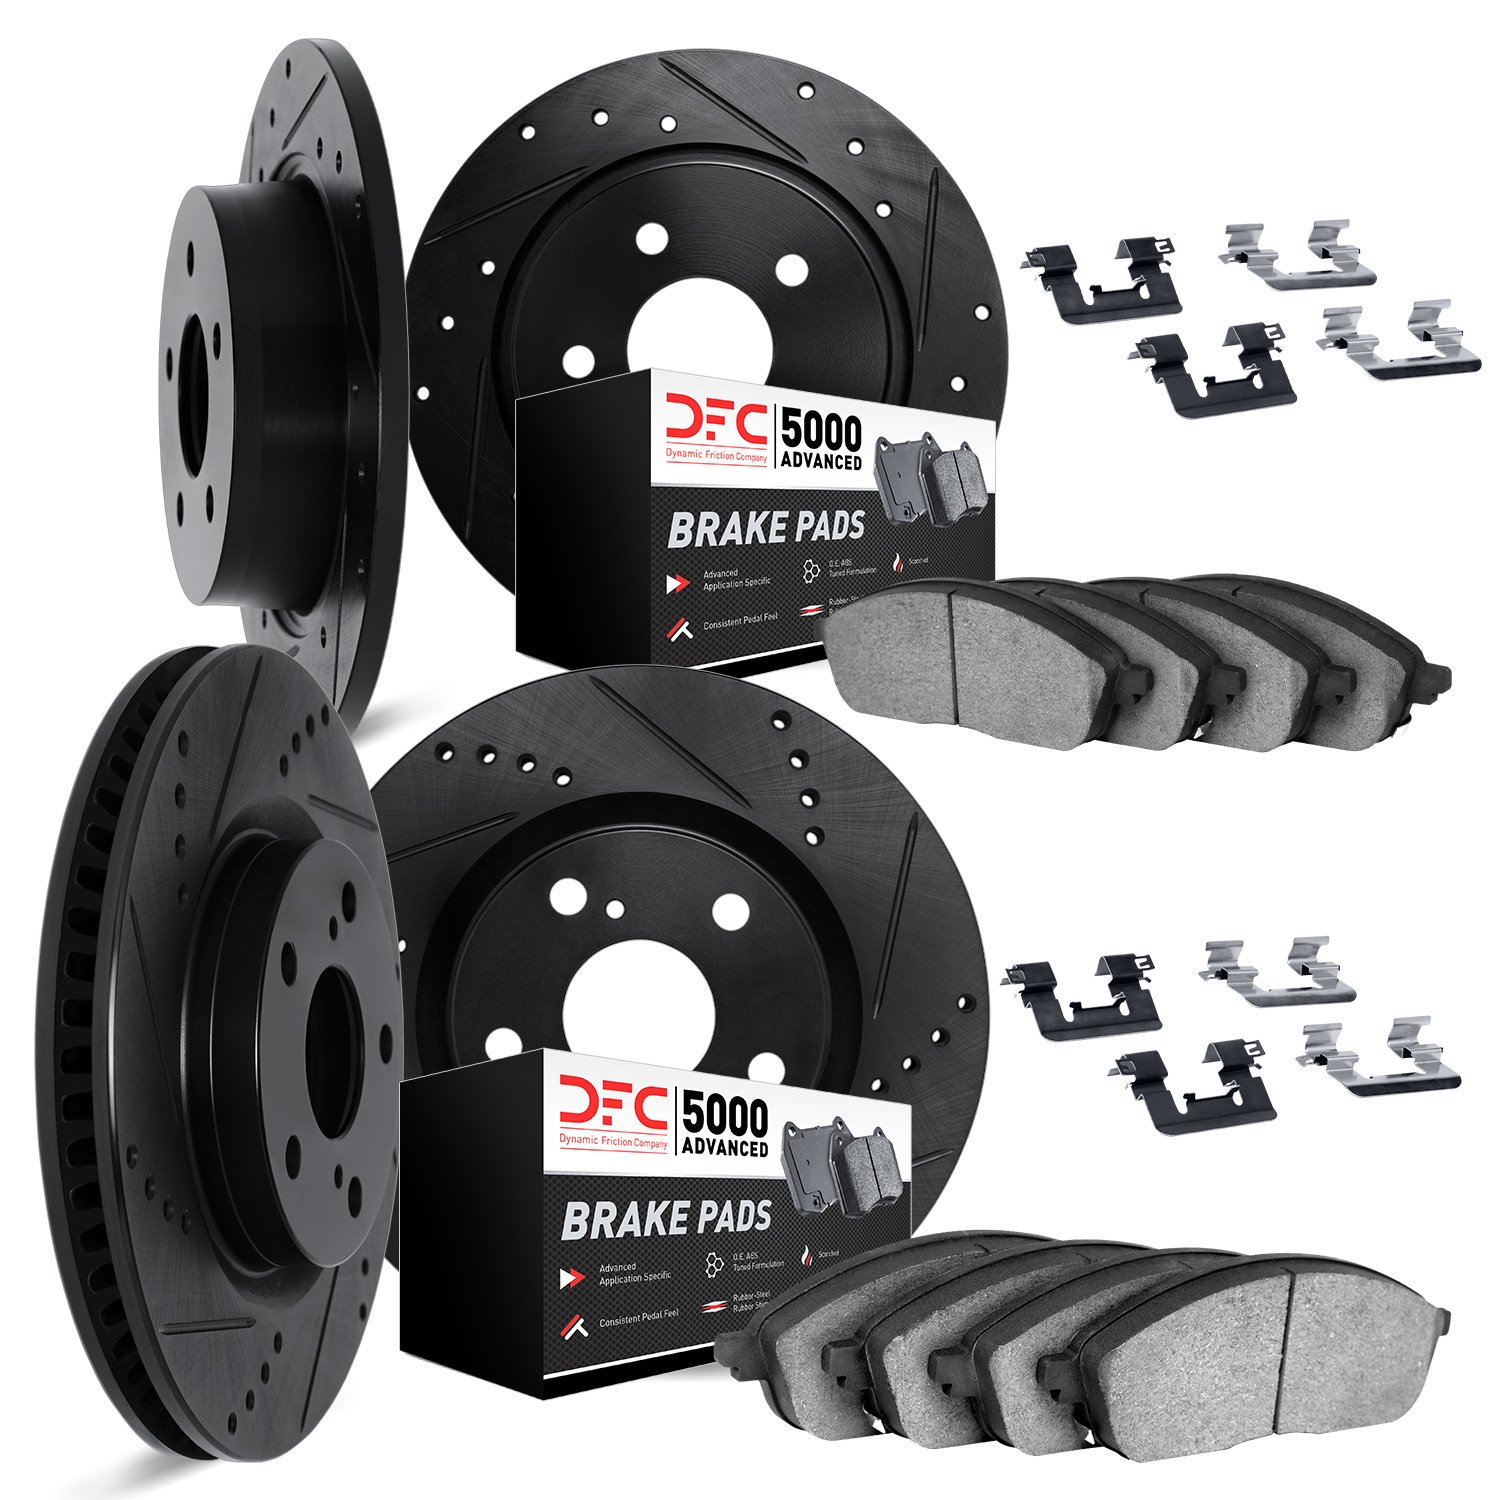 8514-76172 Drilled/Slotted Brake Rotors w/5000 Advanced Brake Pads Kit & Hardware [Black], 2003-2008 Multiple Makes/Models, Posi